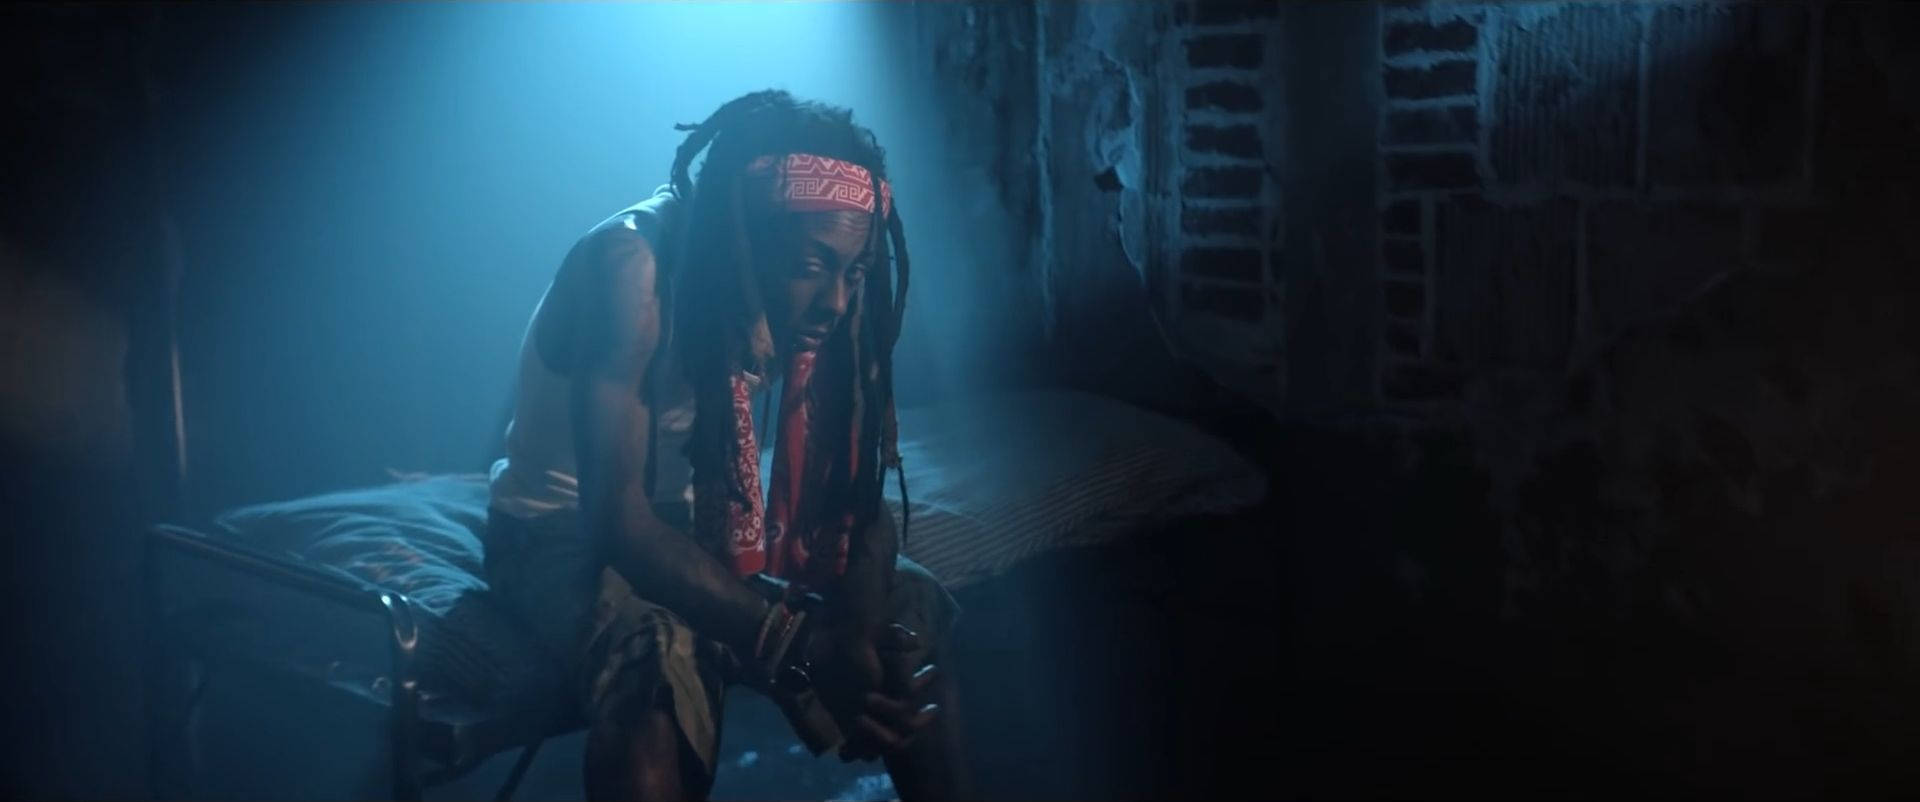 Lil Wayne - The Prodigy Of Rap Music Background